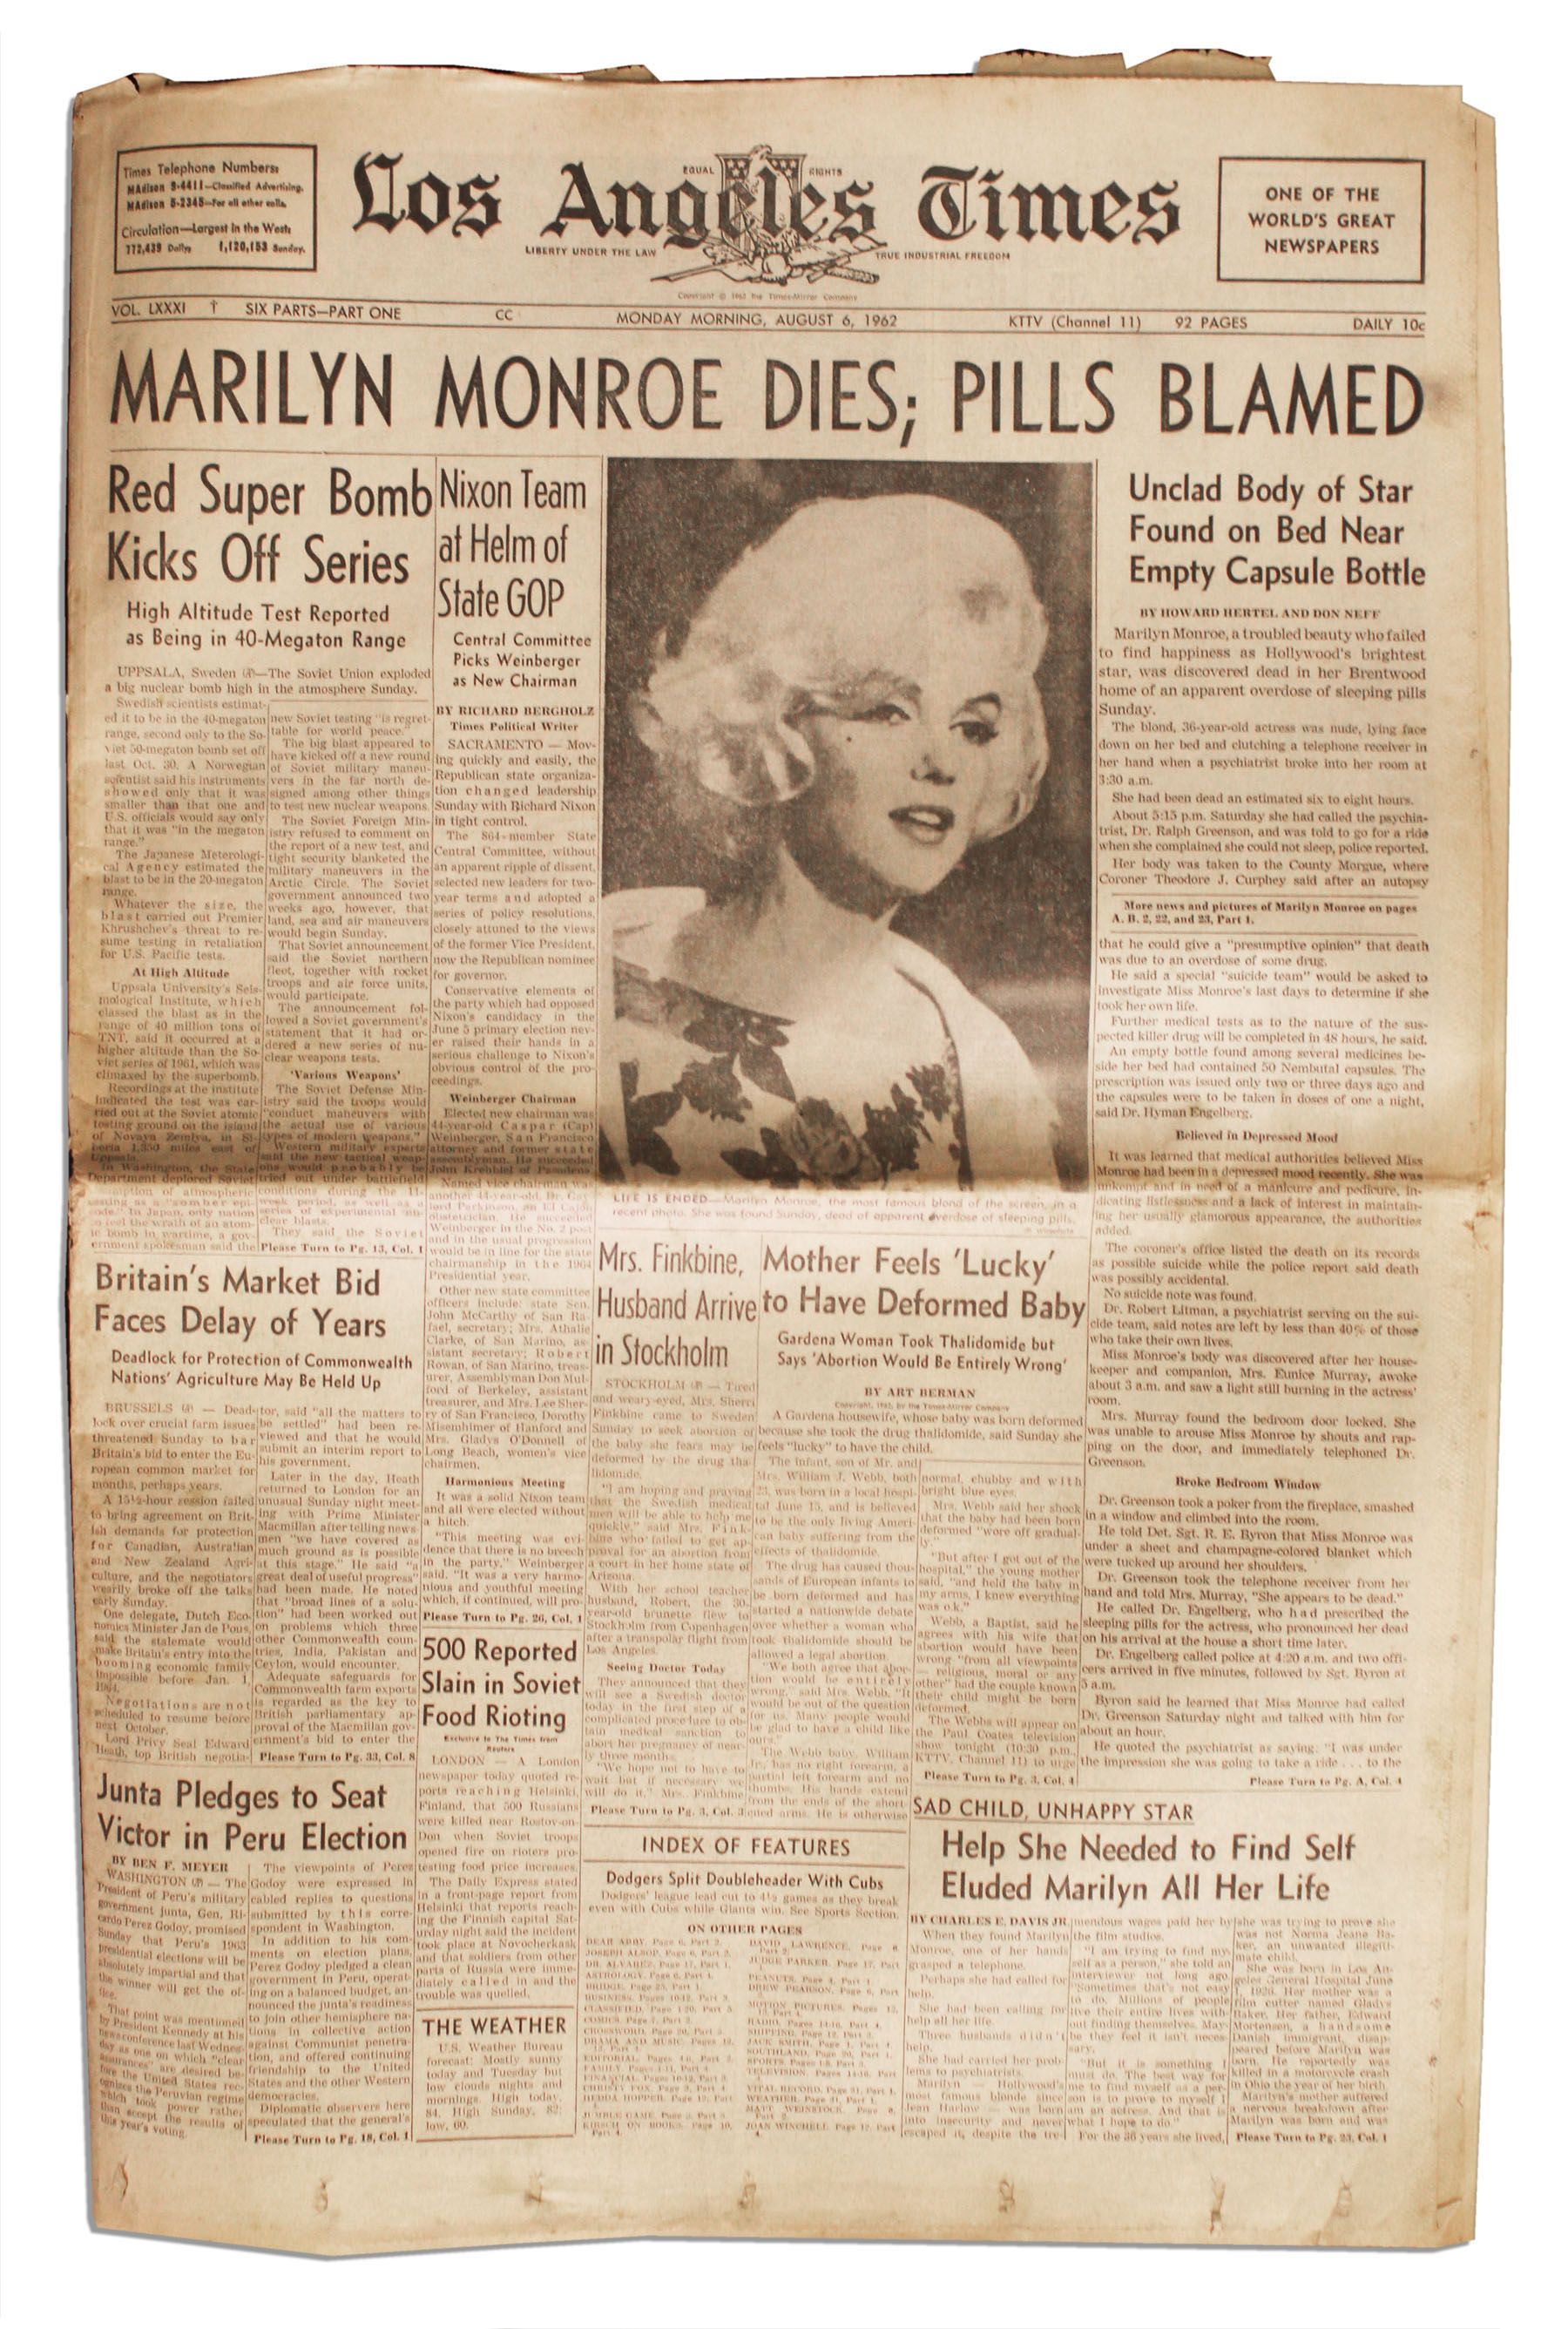 The Murder of Marilyn Monroe by Jay Margolis - tabletklo